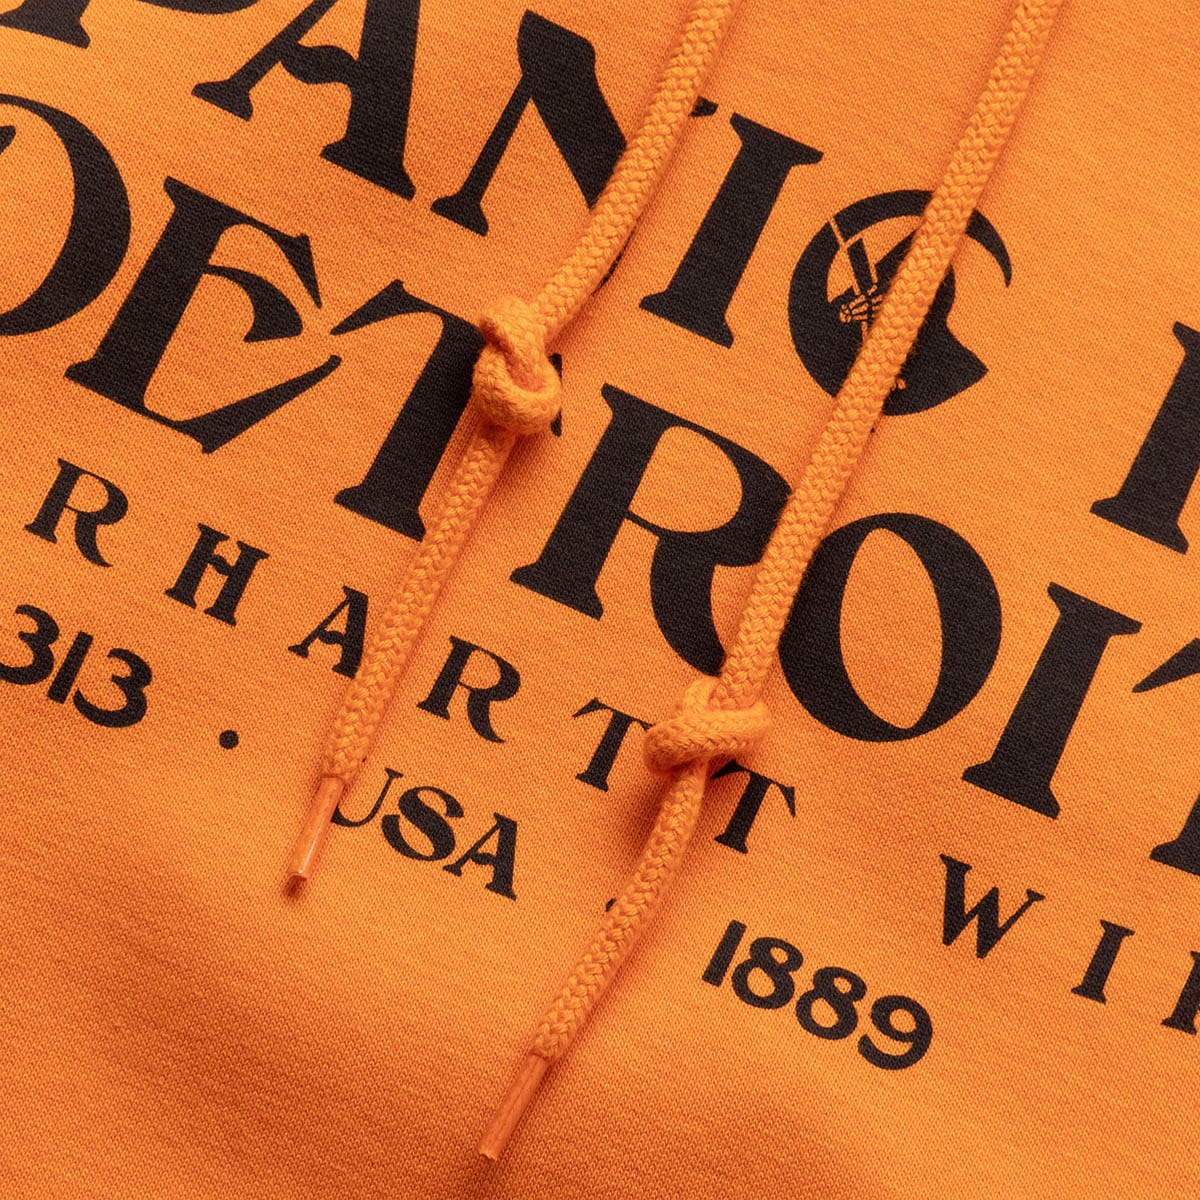 Carhartt WIP Hoodies & Sweatshirts HOODED PANIC SWEAT